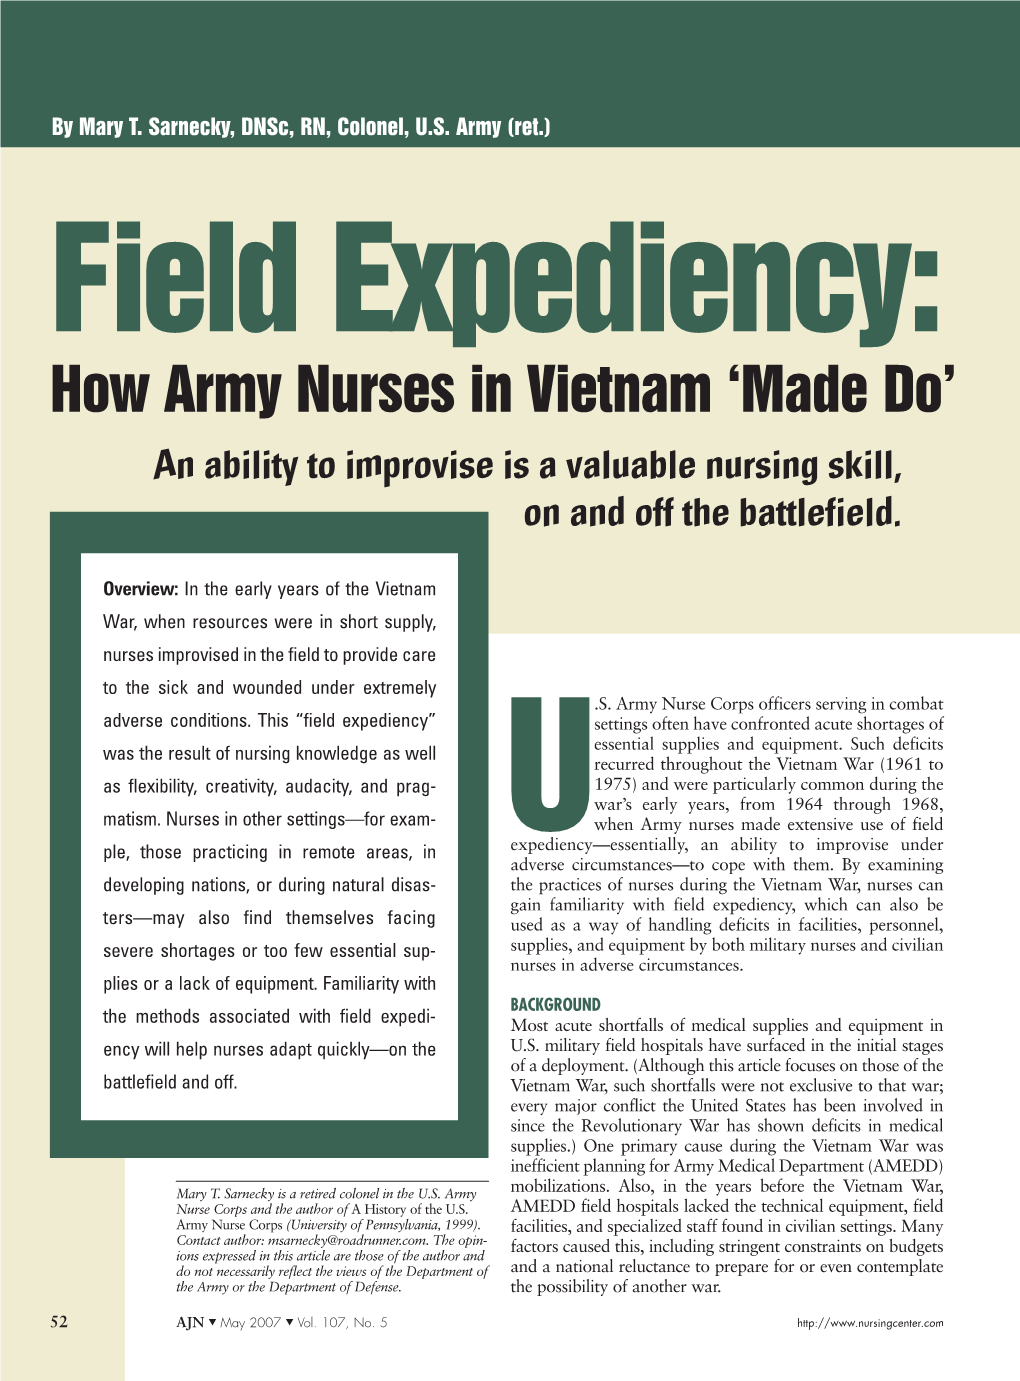 How Army Nurses in Vietnam 'Made